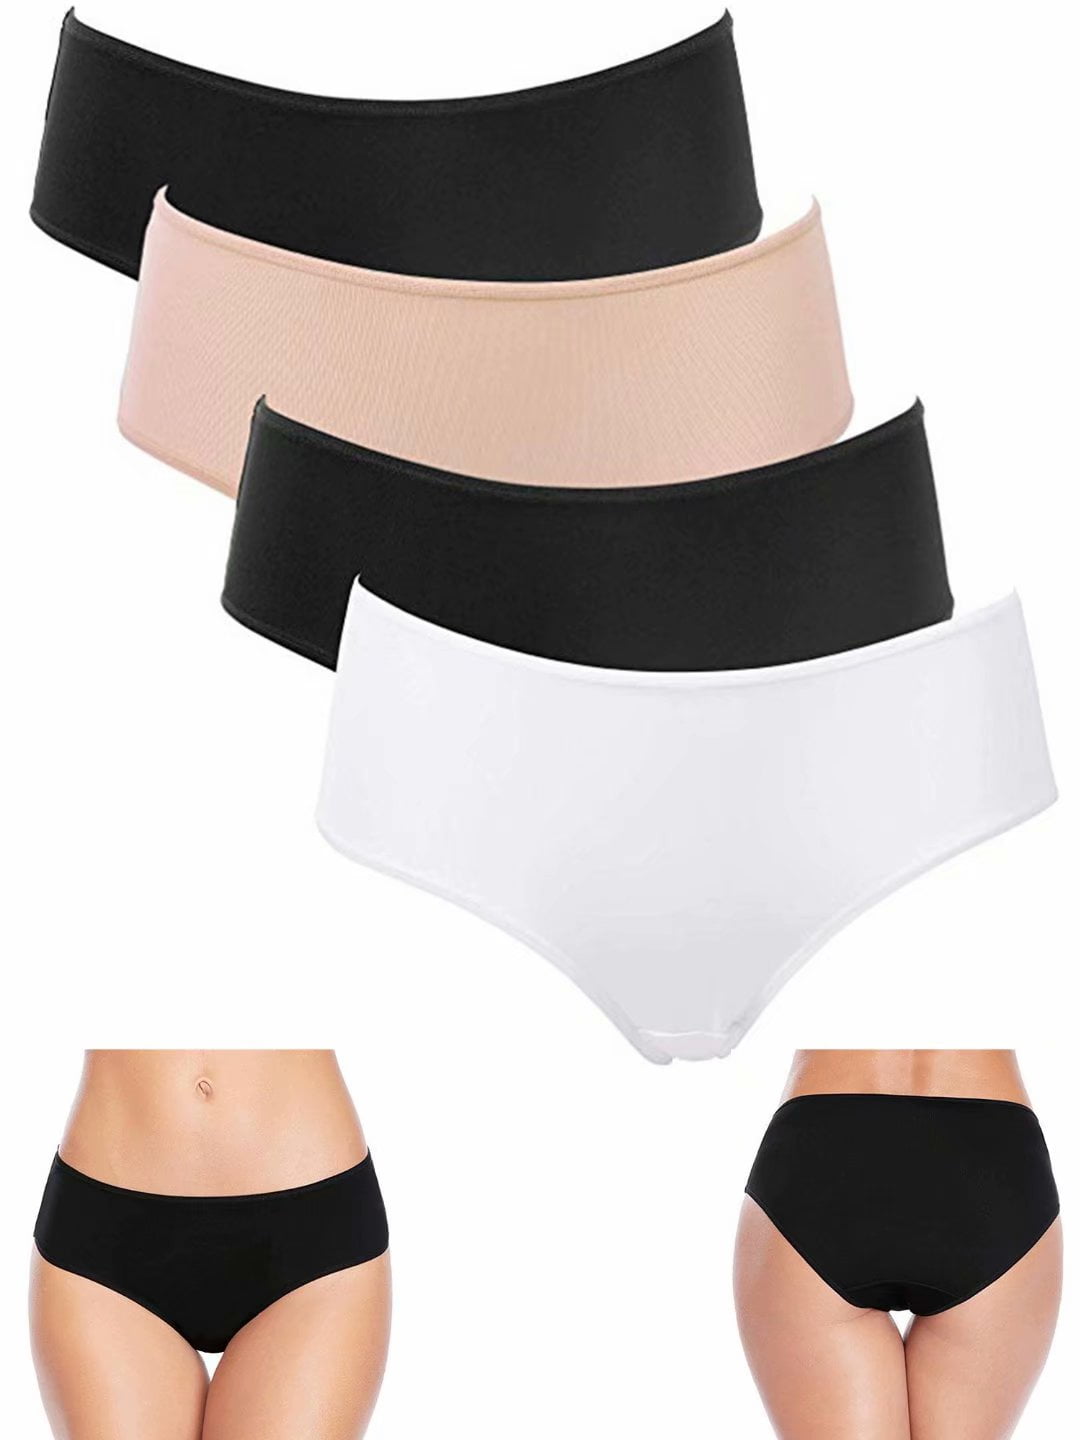 Charmo Women Nylon Panties Mid Rise Briefs Ladies Underwear